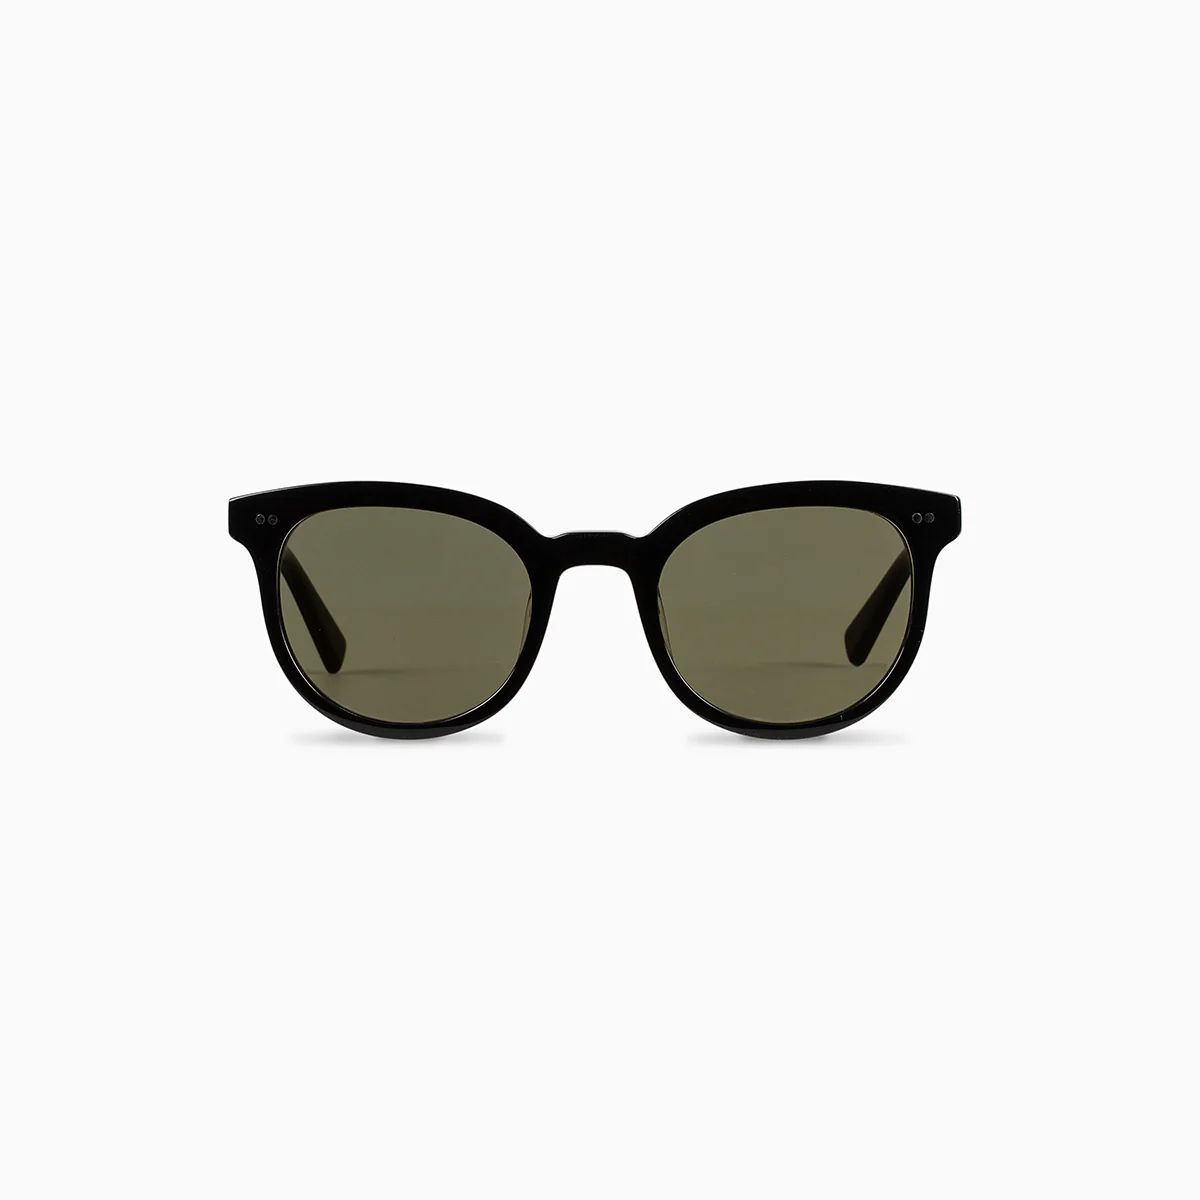 Classic Round Sunglasses in Tort and Black | Eyewear | Uncommon James | Uncommon James